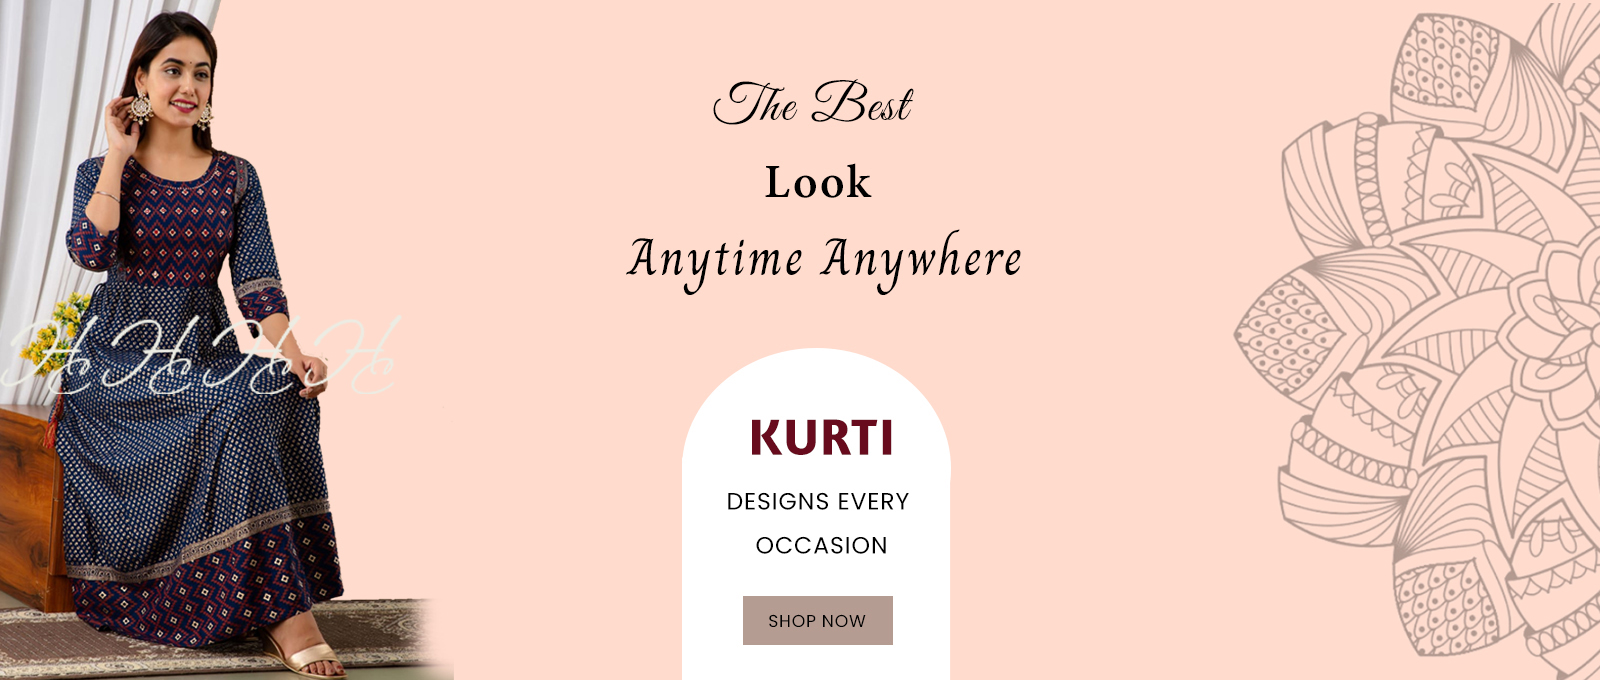 How to make a simple Kurti look stylish | by Mahavir | Medium